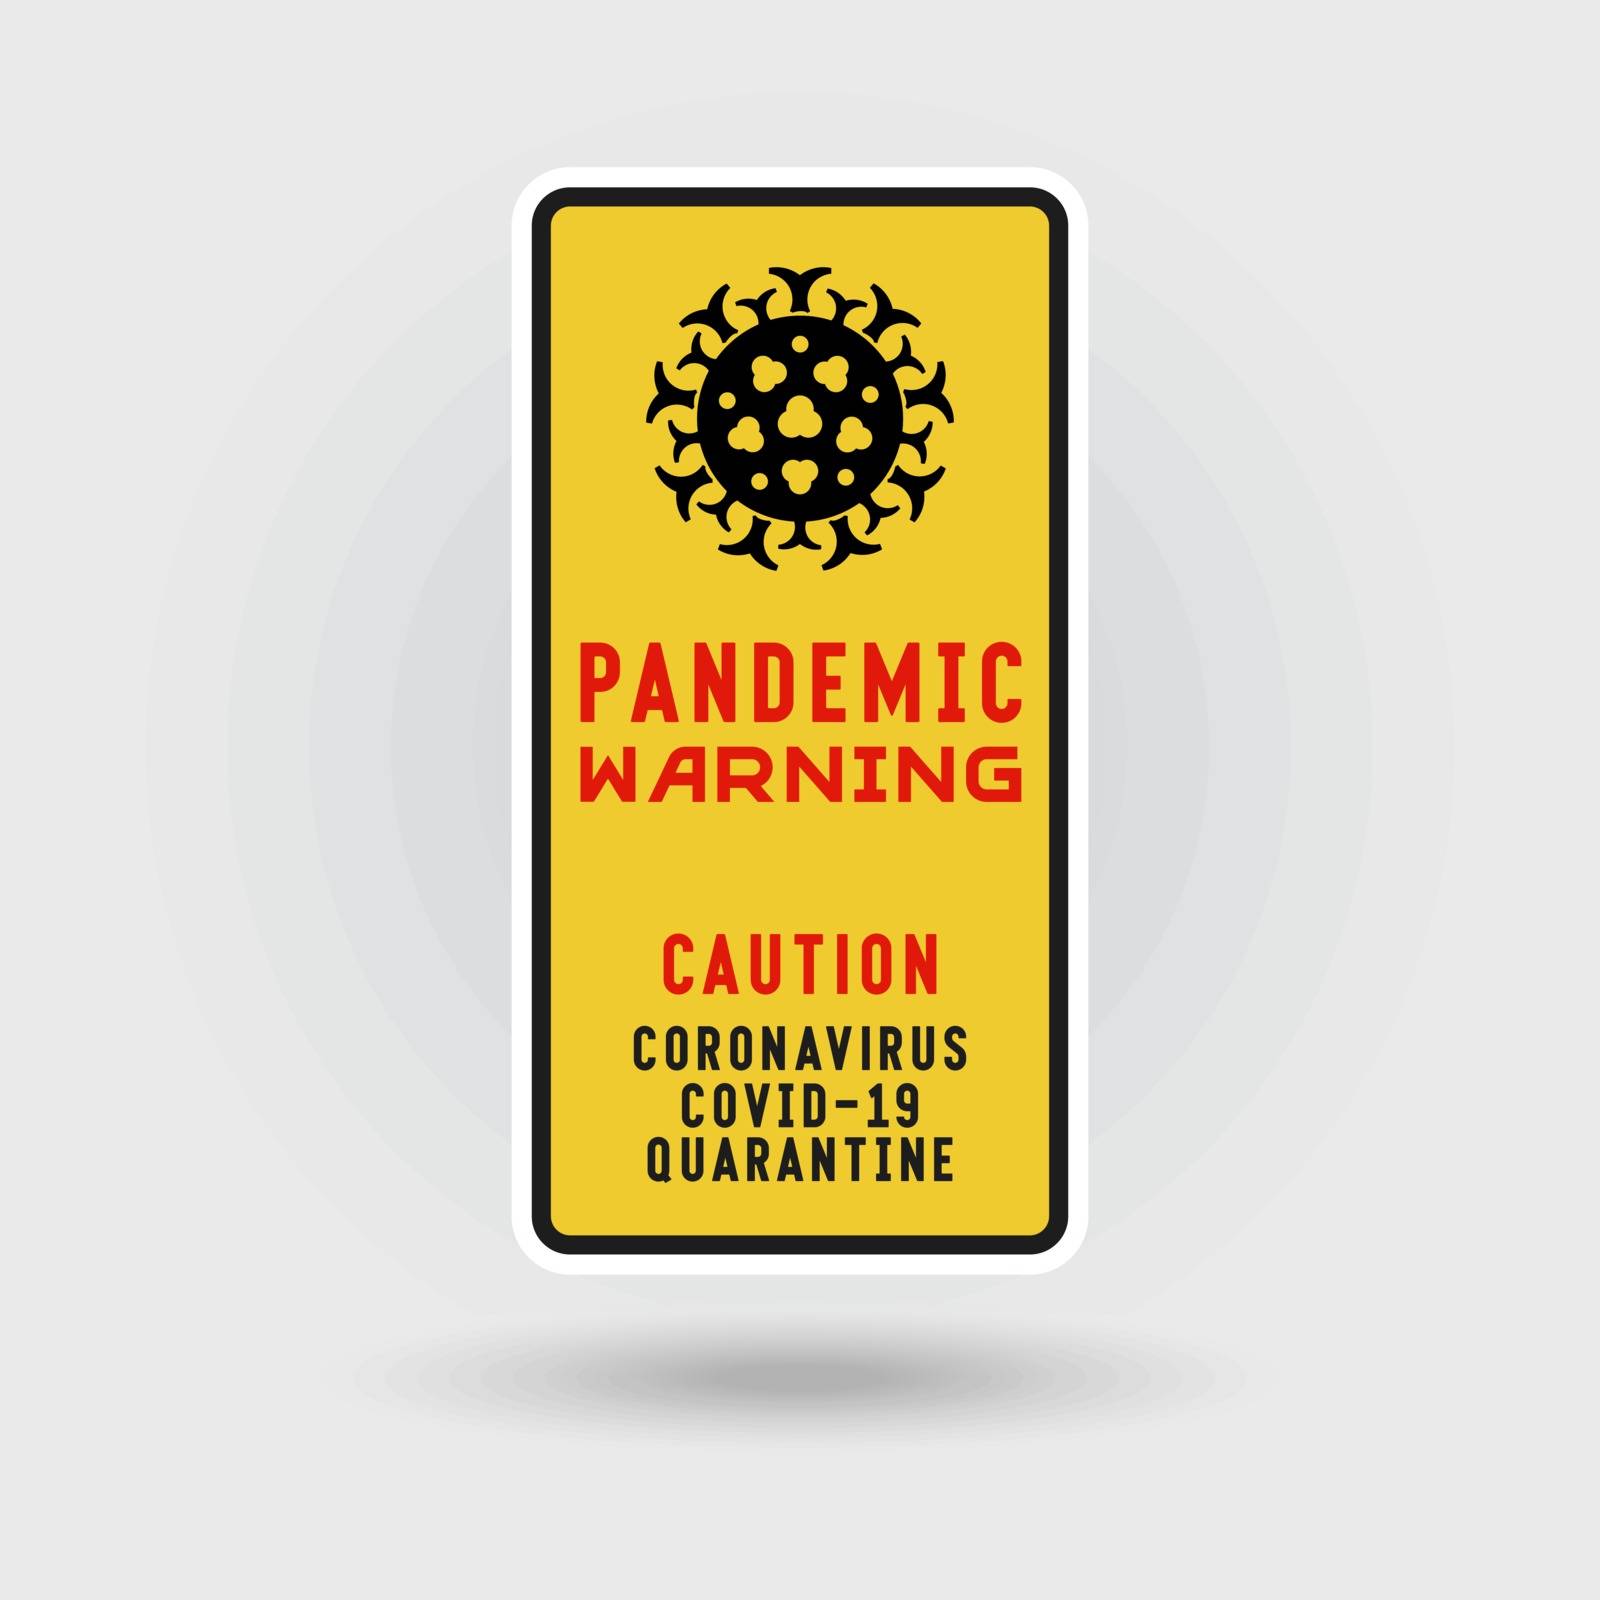 COVID-19 Coronavirus quarantine warning sign. Includes a stylized pneumonia virus icon. The message warns of pandemic. Vertical shape design.